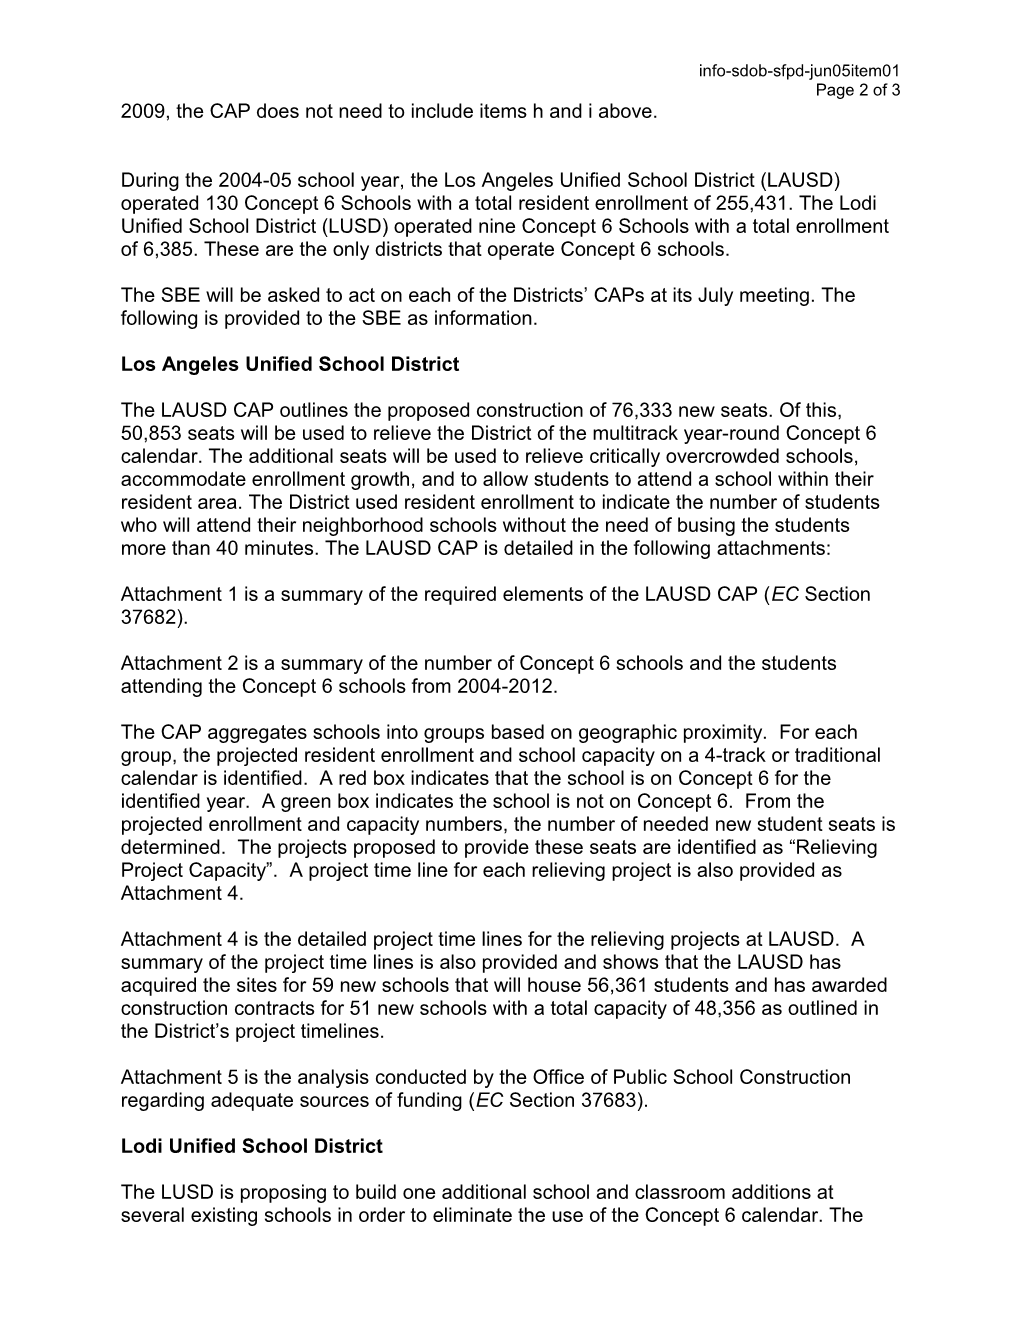 June 2005 SDOB-SFPD Item 01 - Information Memorandum (CA State Board of Education)